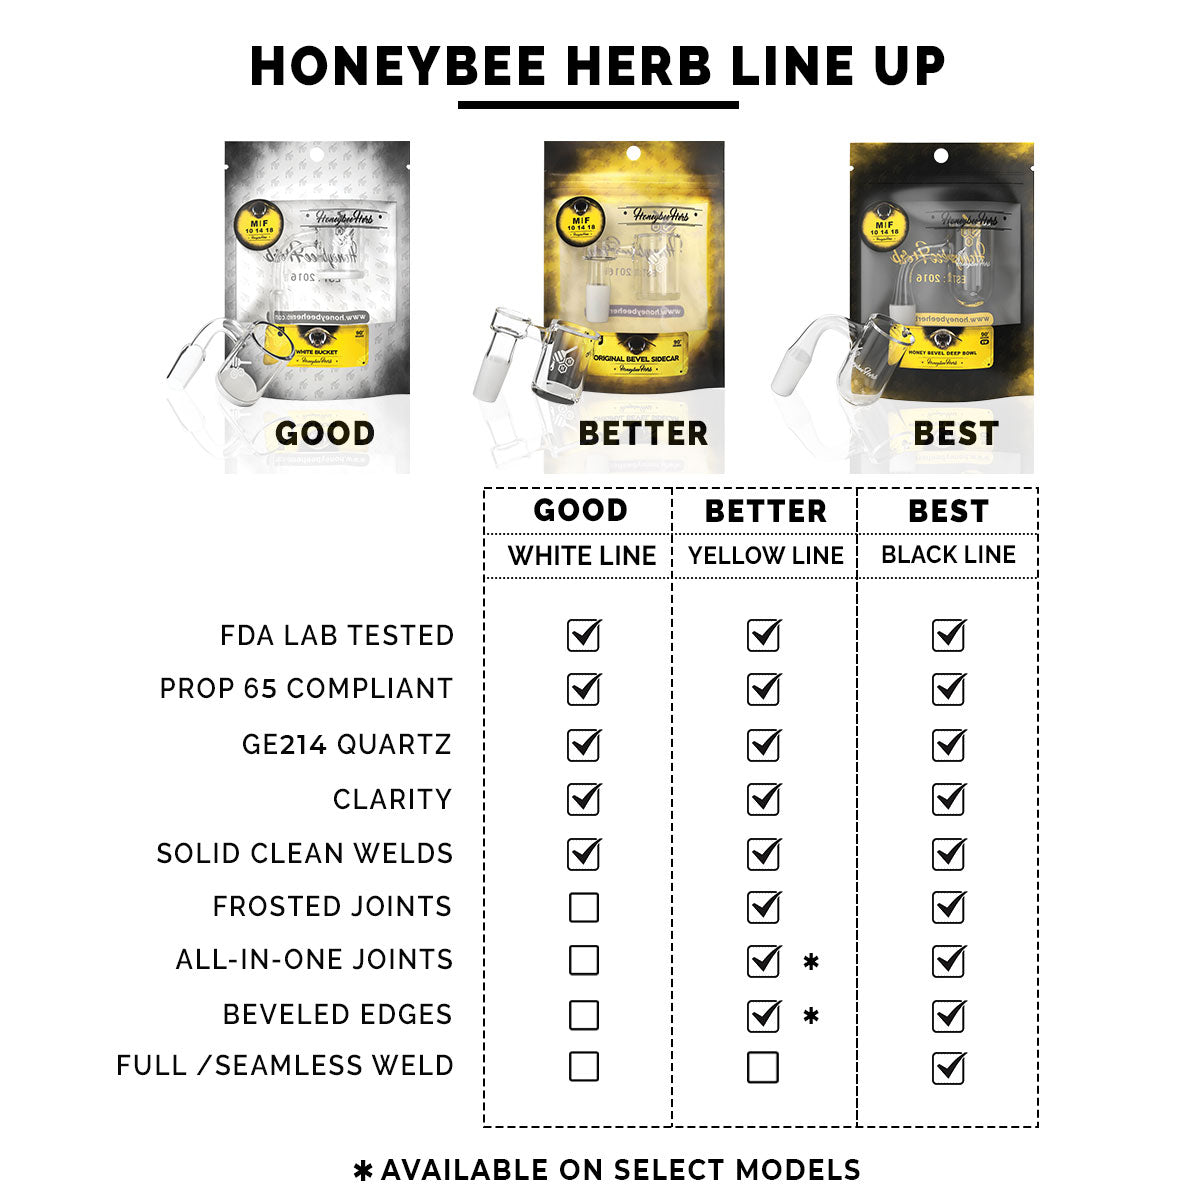 Honeybee Herb Quartz Banger comparison chart, showing features of Good, Better, Best lines.